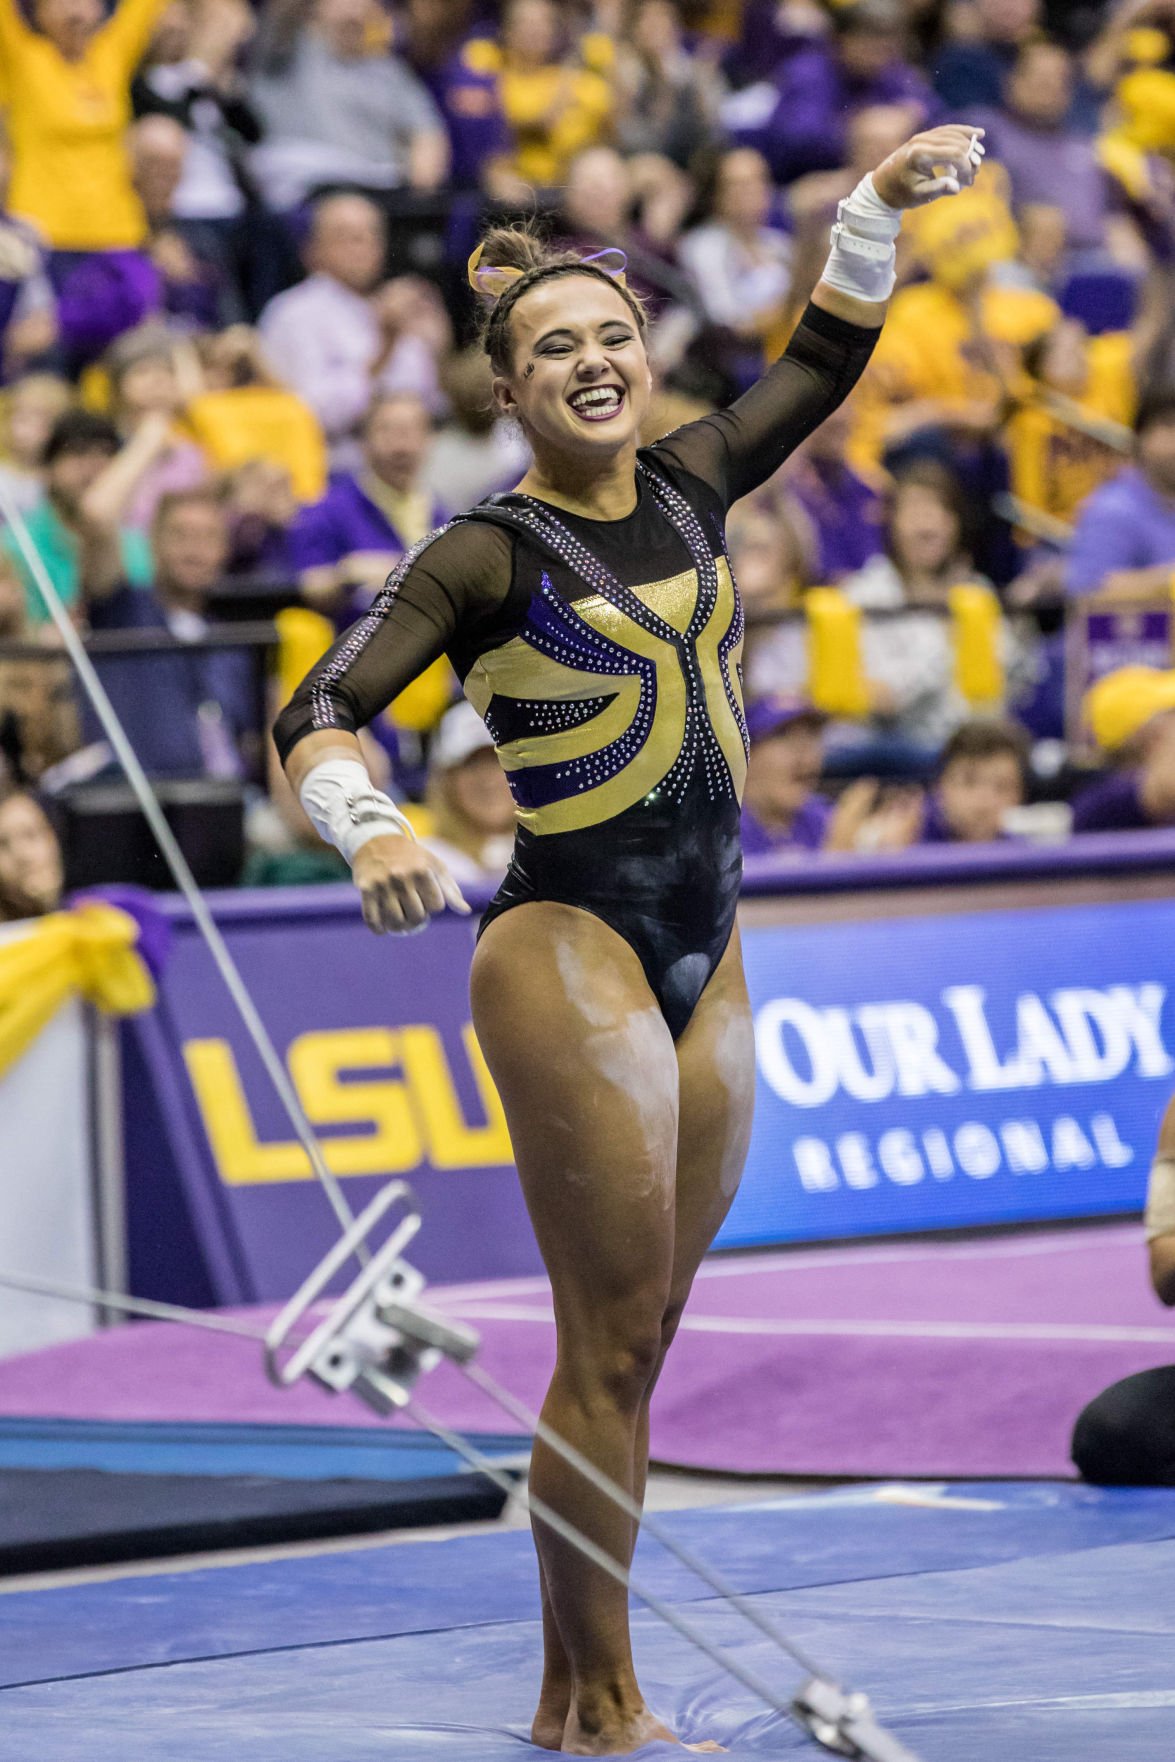 Lsus Ashleigh Gnat Named Sec Gymnast Of The Week Tigers Set Program